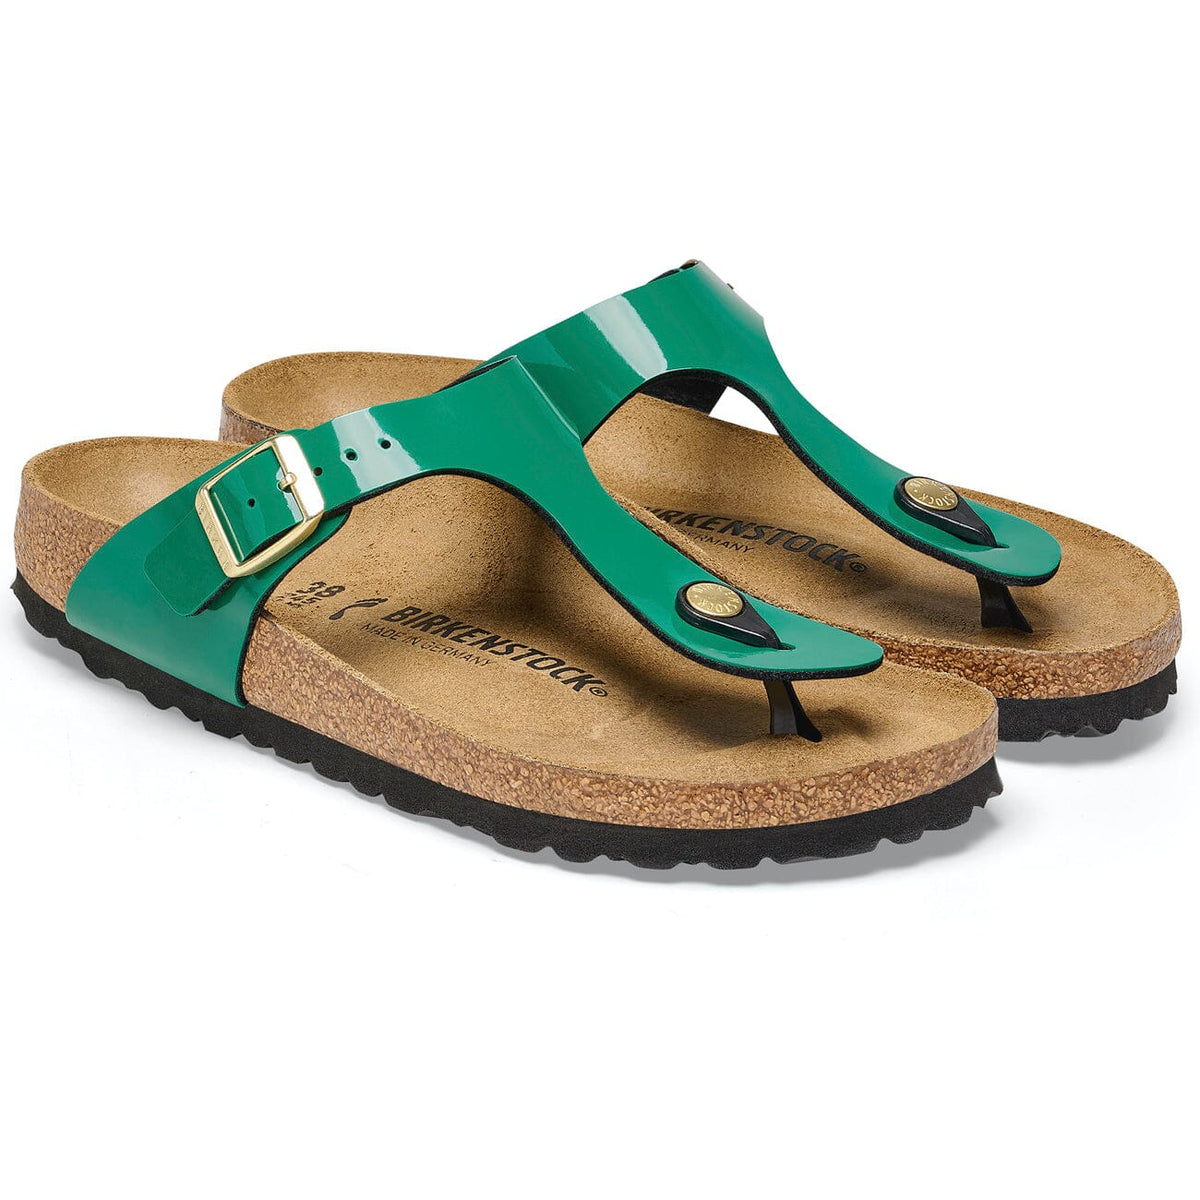 Birkenstock Gizeh Patent Digital Green Birko-Flor Regular Fit Sandals Birkenstock Seasonal 